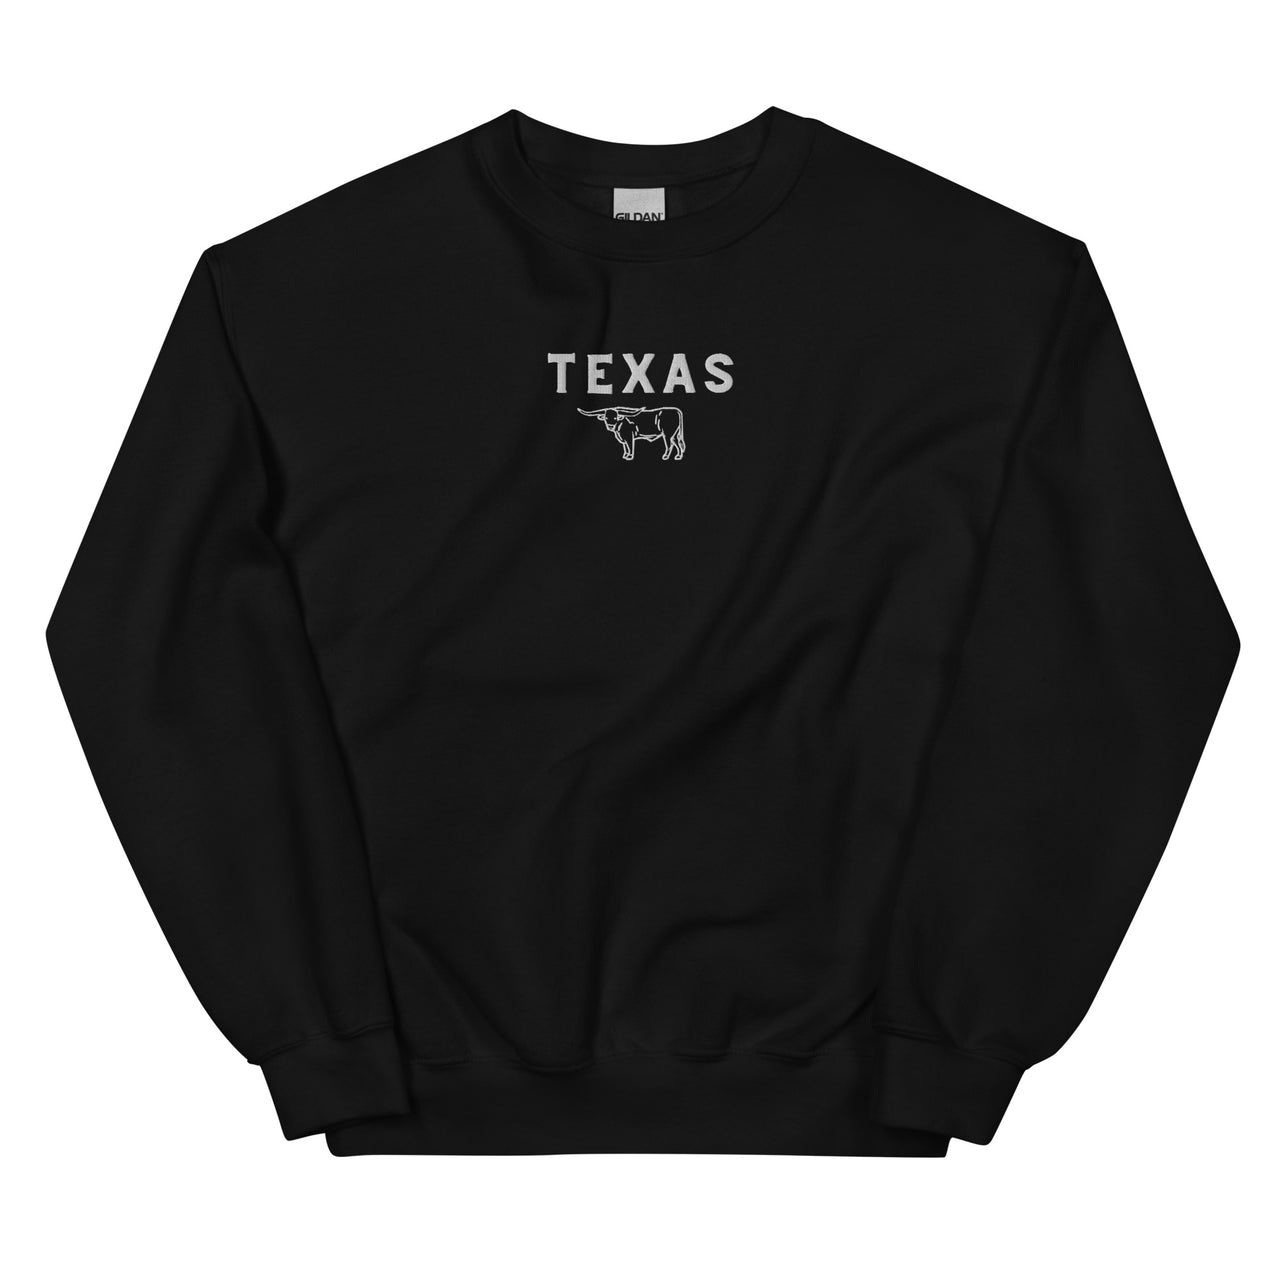 Texas Embroidered Sweatshirt, College, Sweatshirt Crewneck embroider University, Houston, Texas, Embroidery, Trendy, Aesthetic, Dallas, Gift